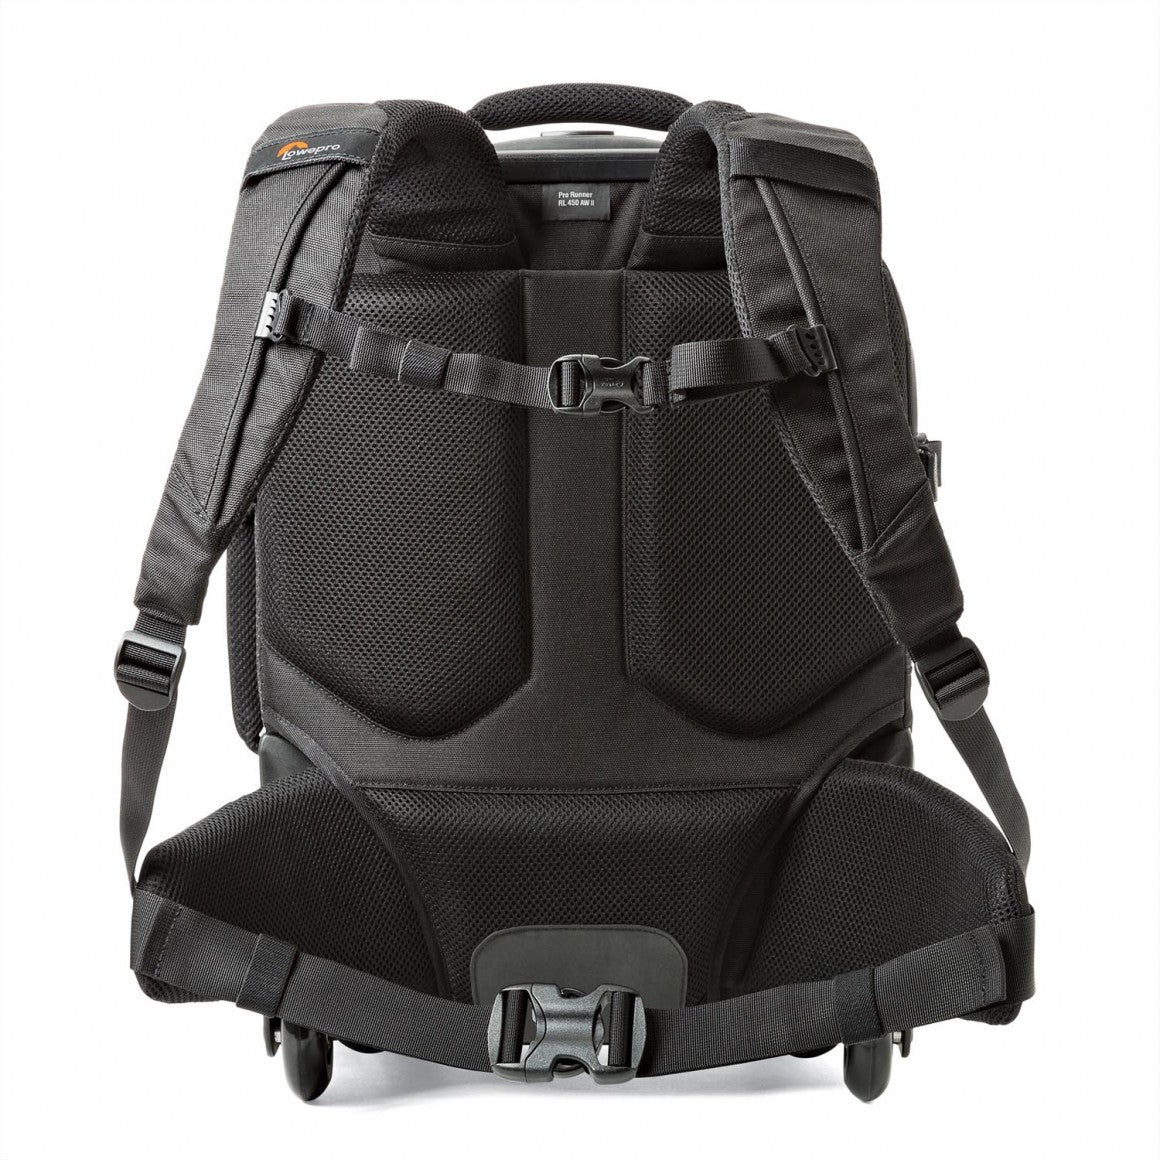 Lowepro Pro Runner RL x450 AW II Backpack (Black), bags roller bags, Lowepro - Pictureline  - 2